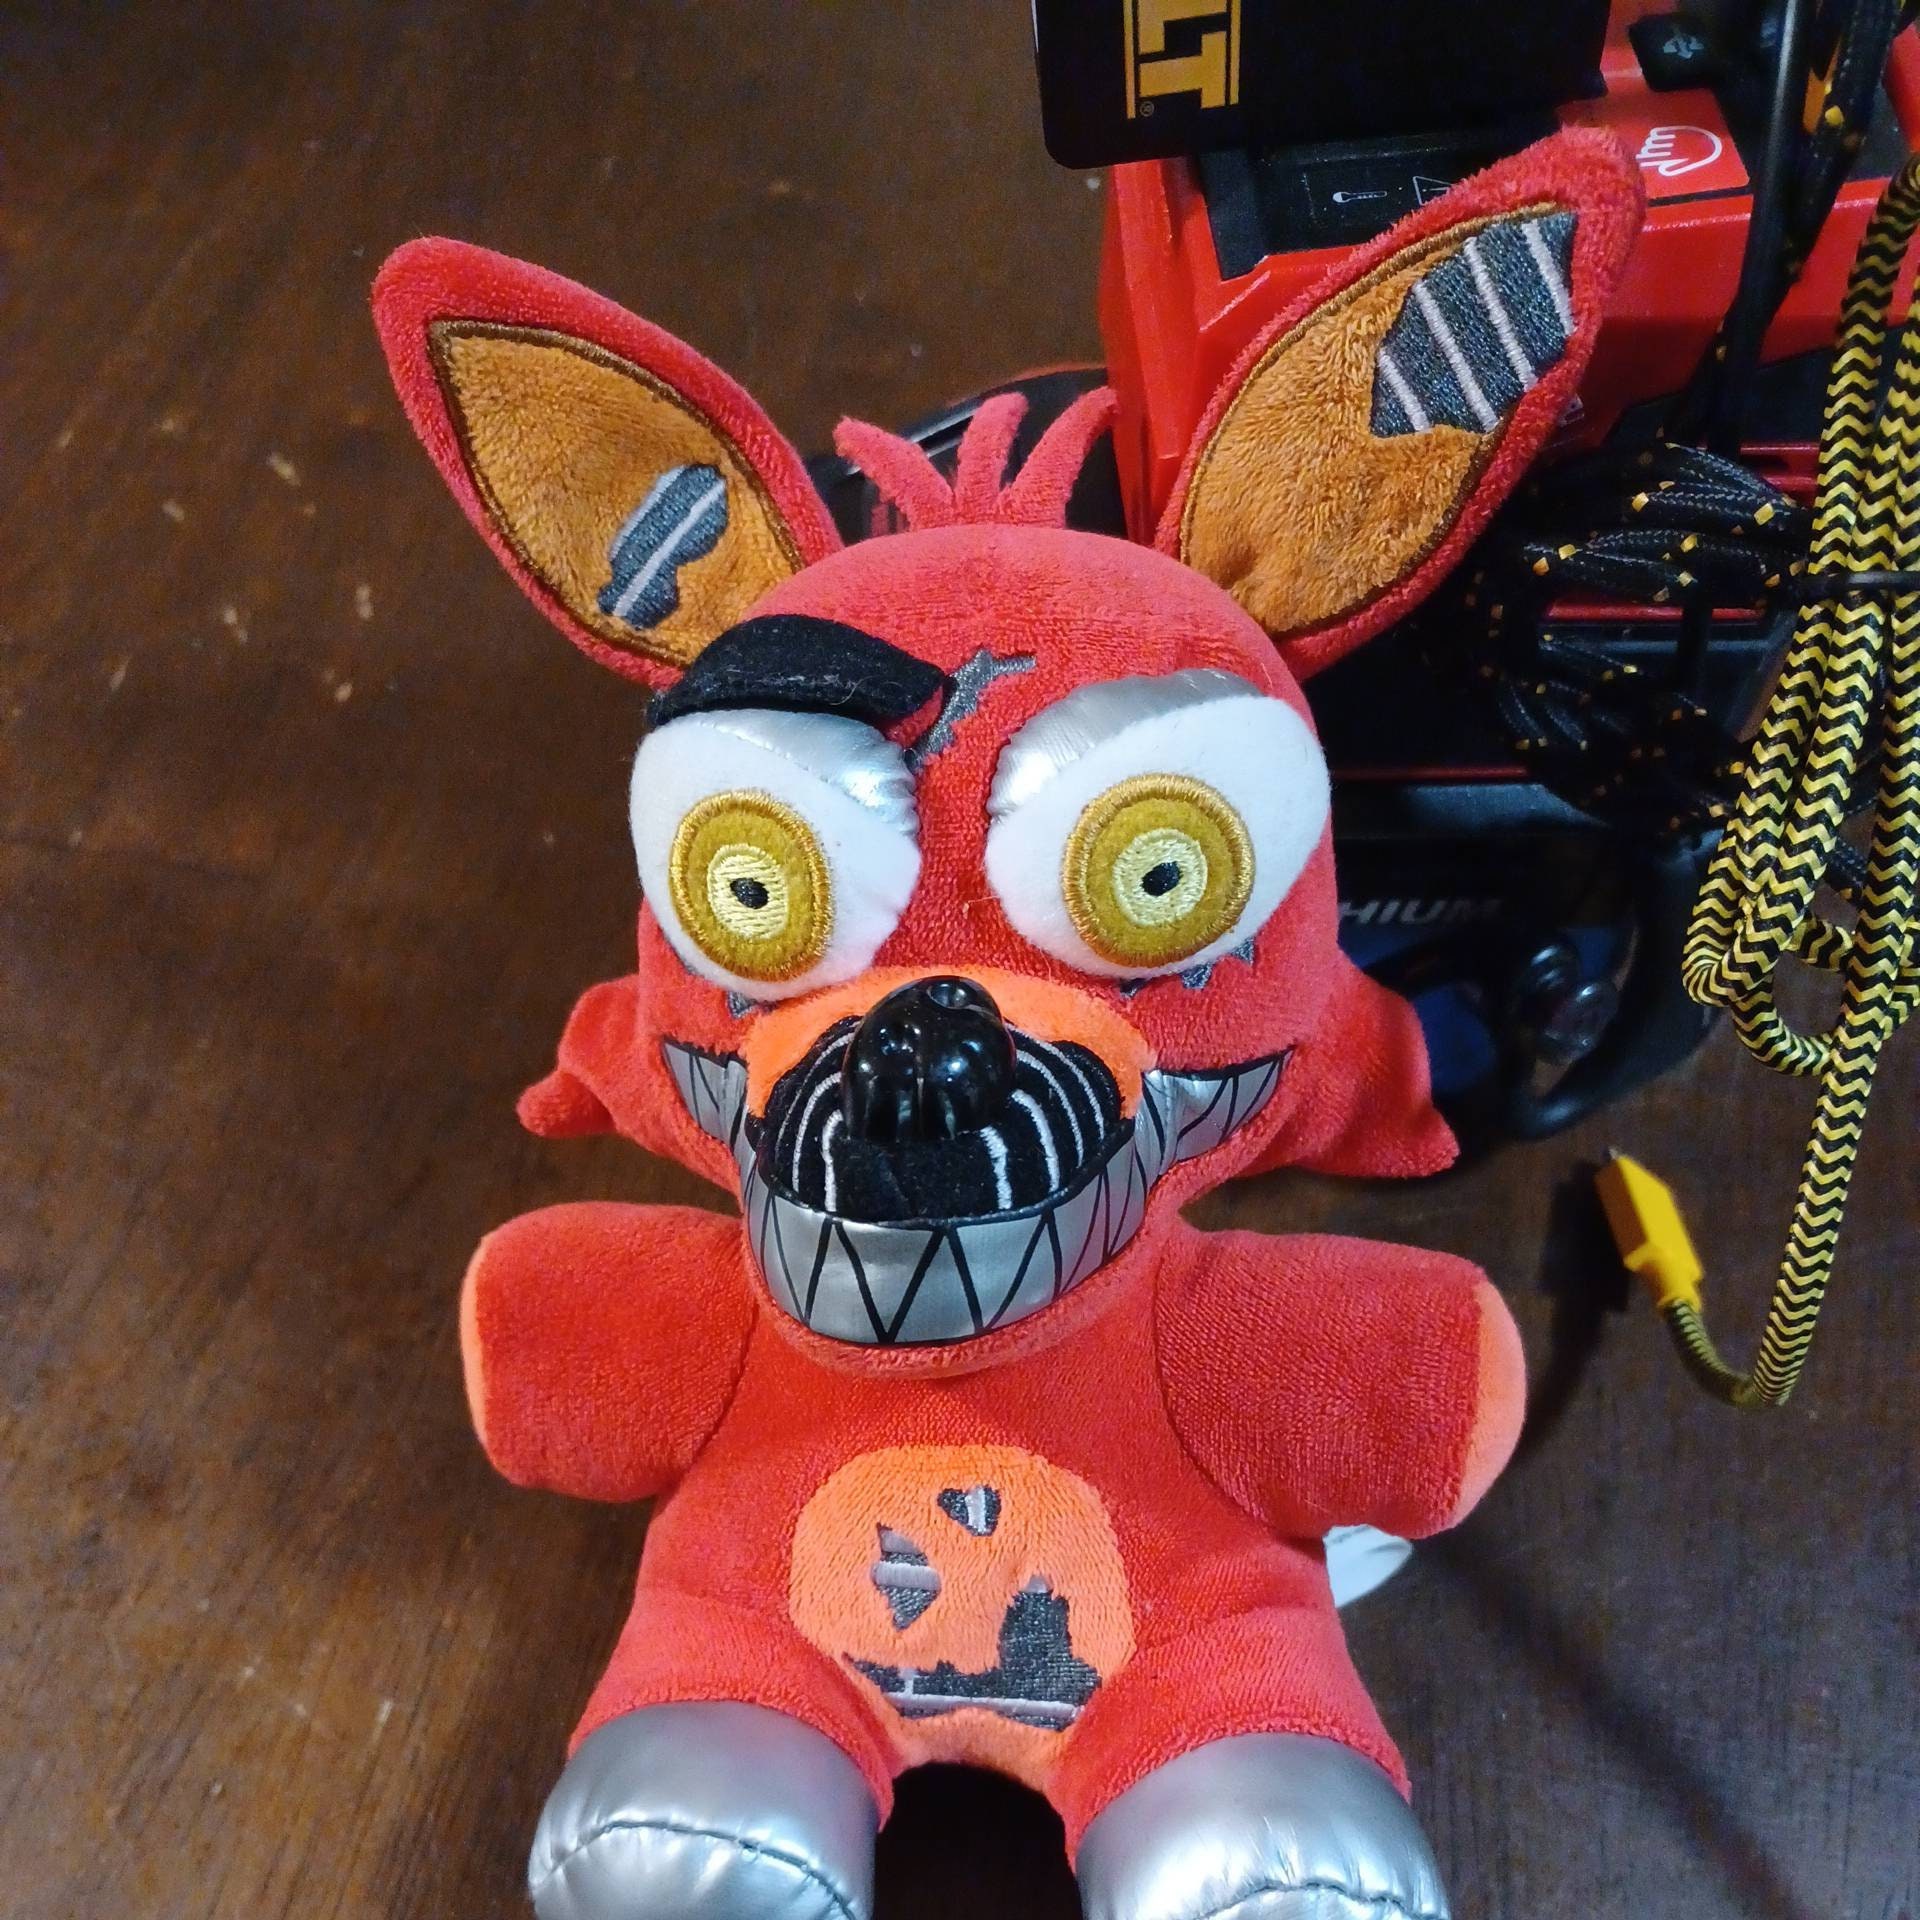 Funko Five Nights At Freddy's Nightmare Foxy Plush